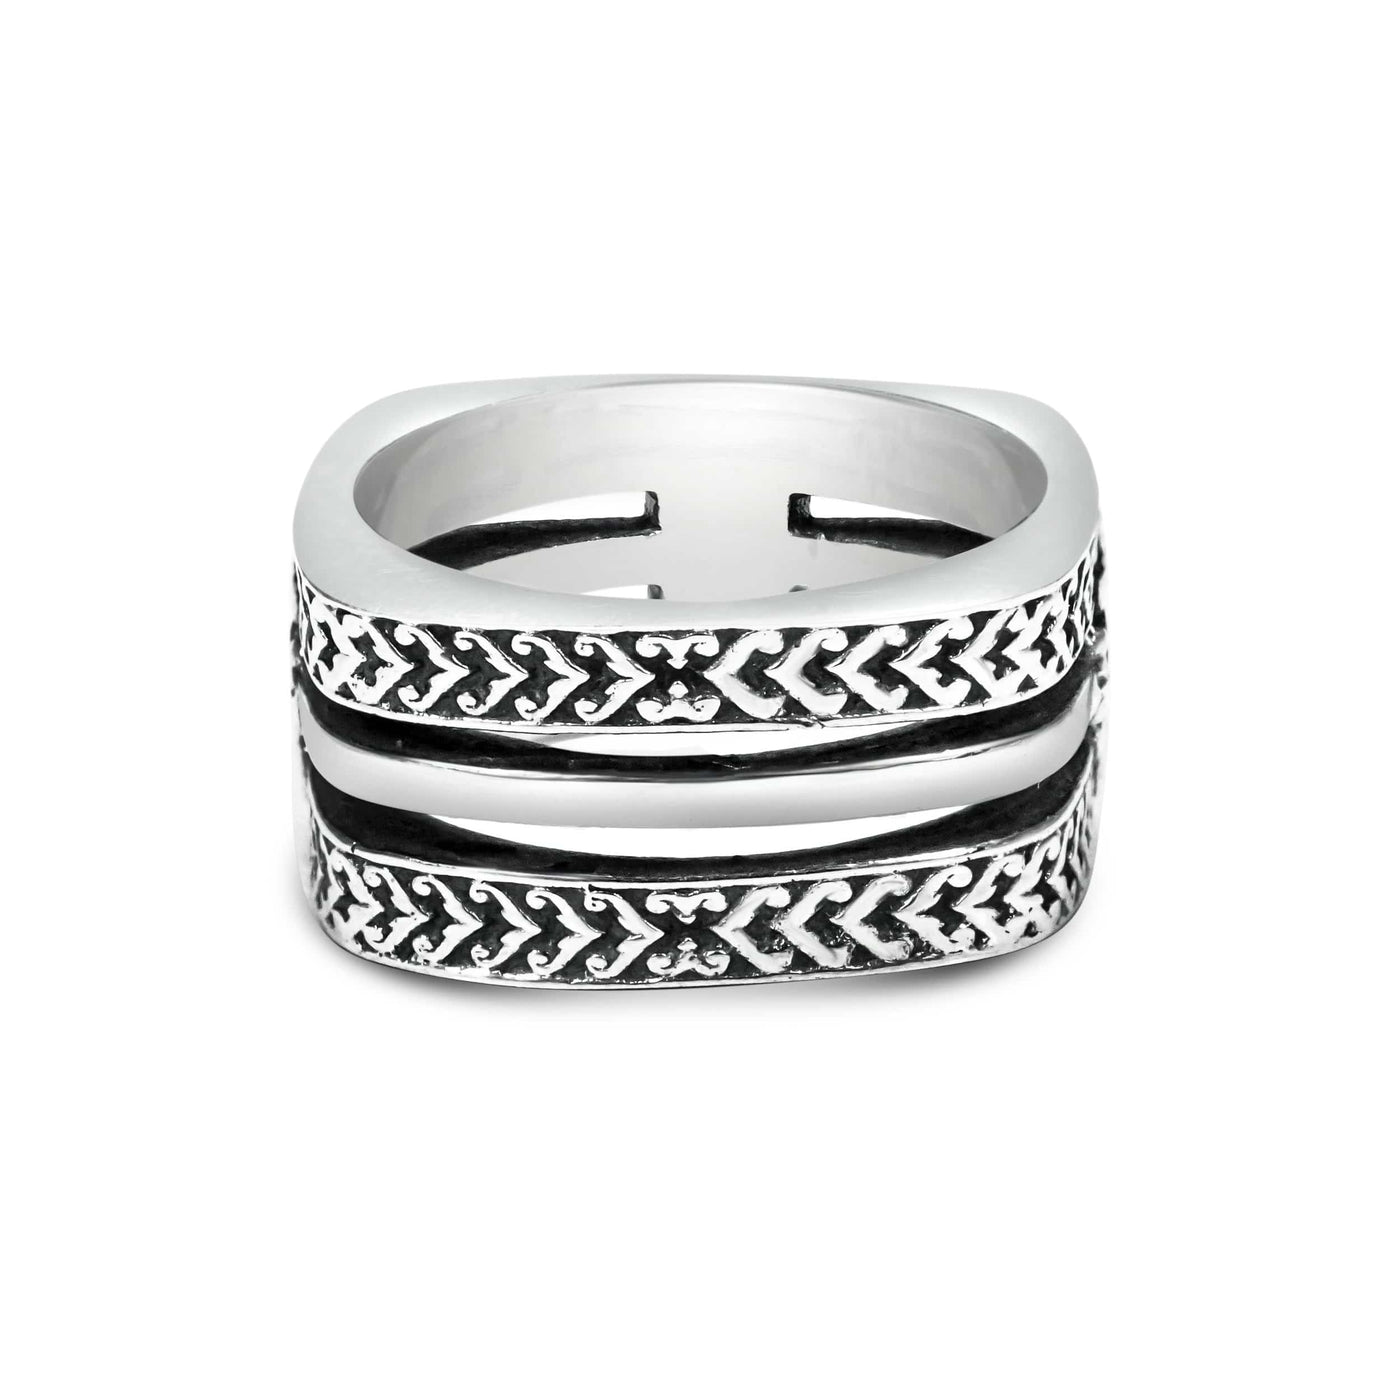 Quadrato - Girati Silver Rings for Men